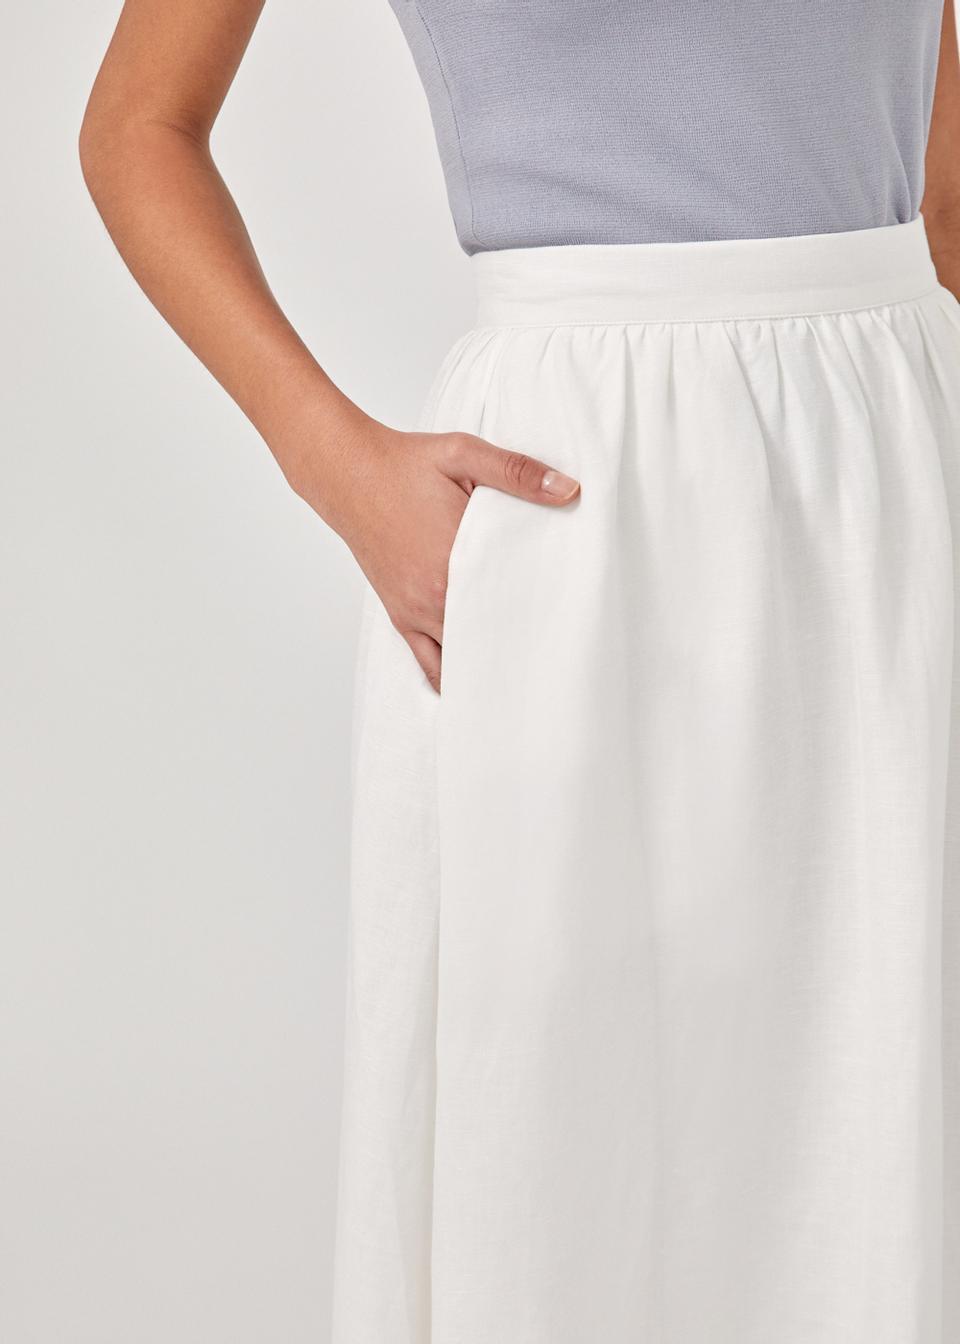 Mollie Ruched Linen Midaxi Skirt